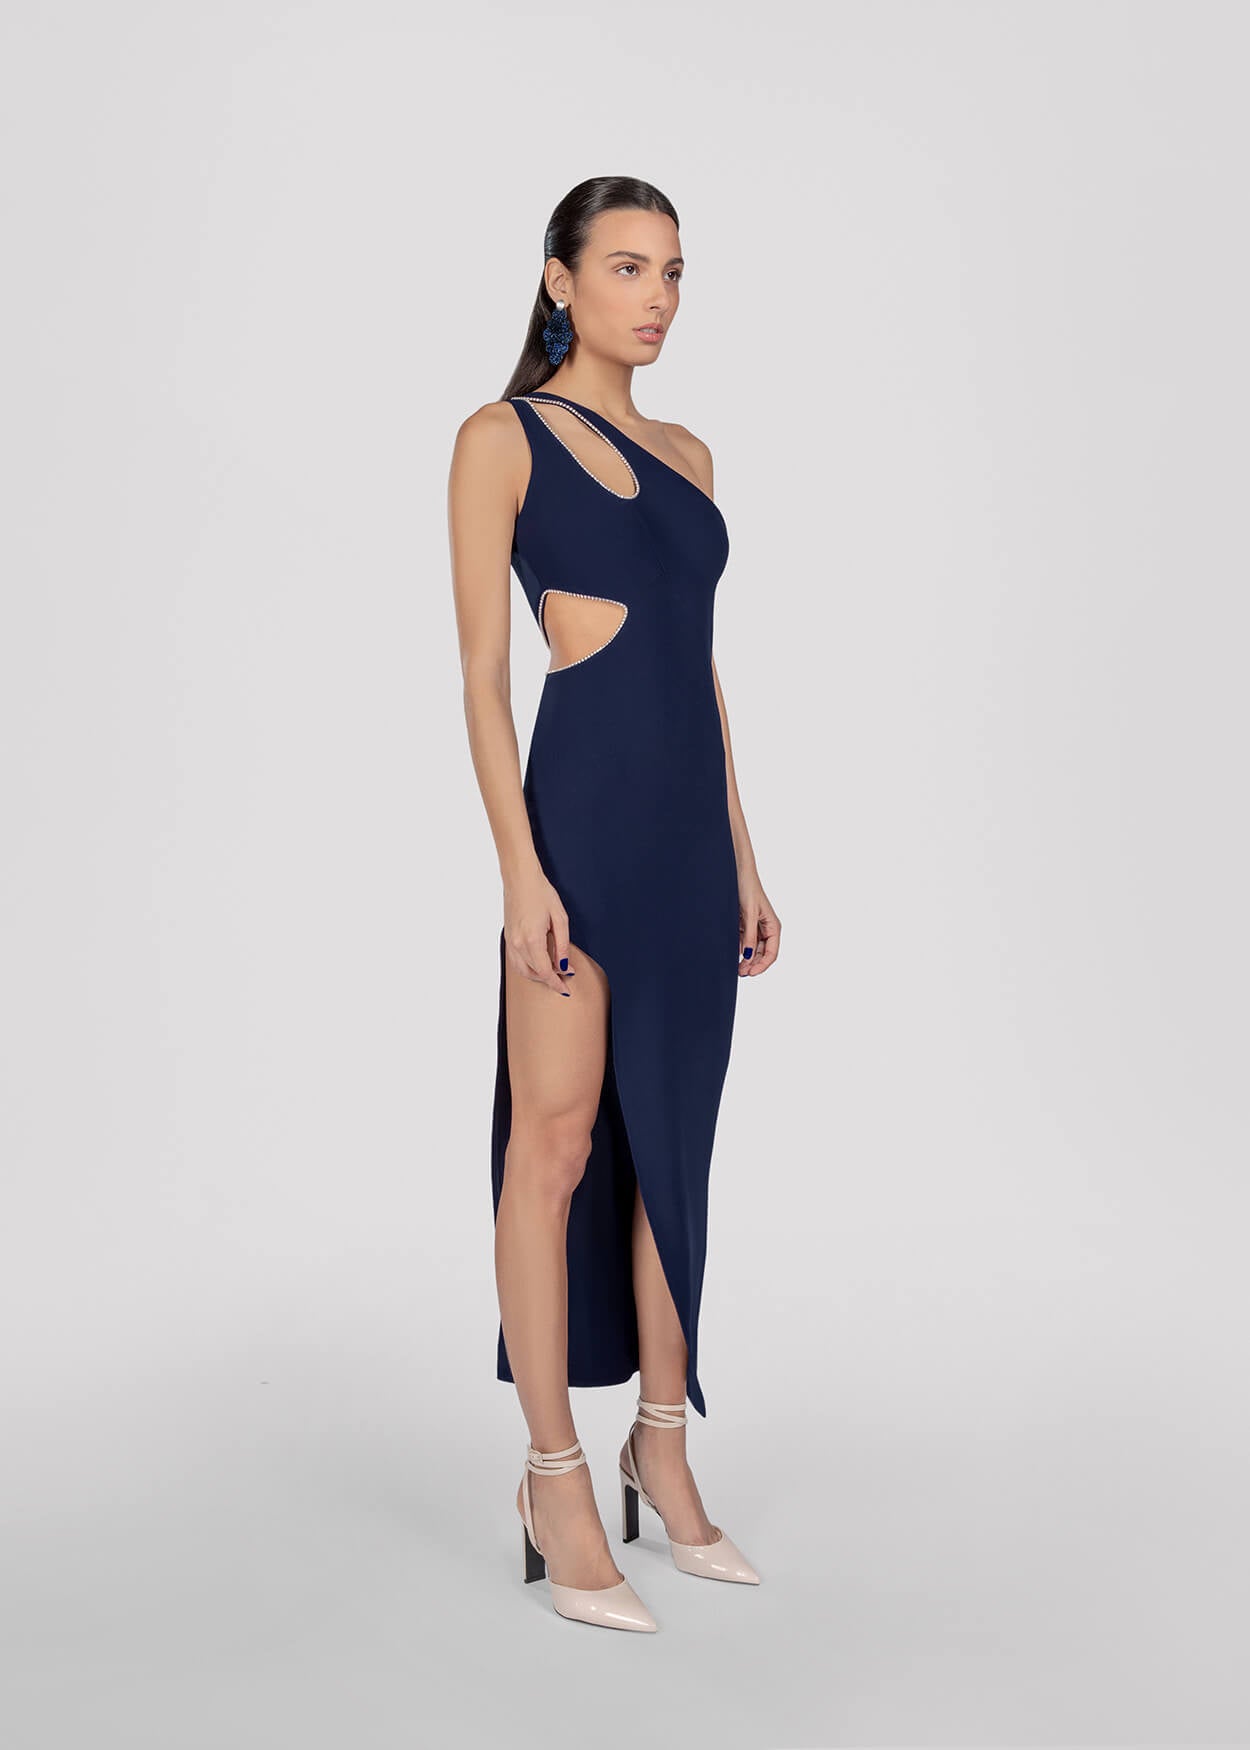 Ariel Navy Blue Asymmetrical Dress